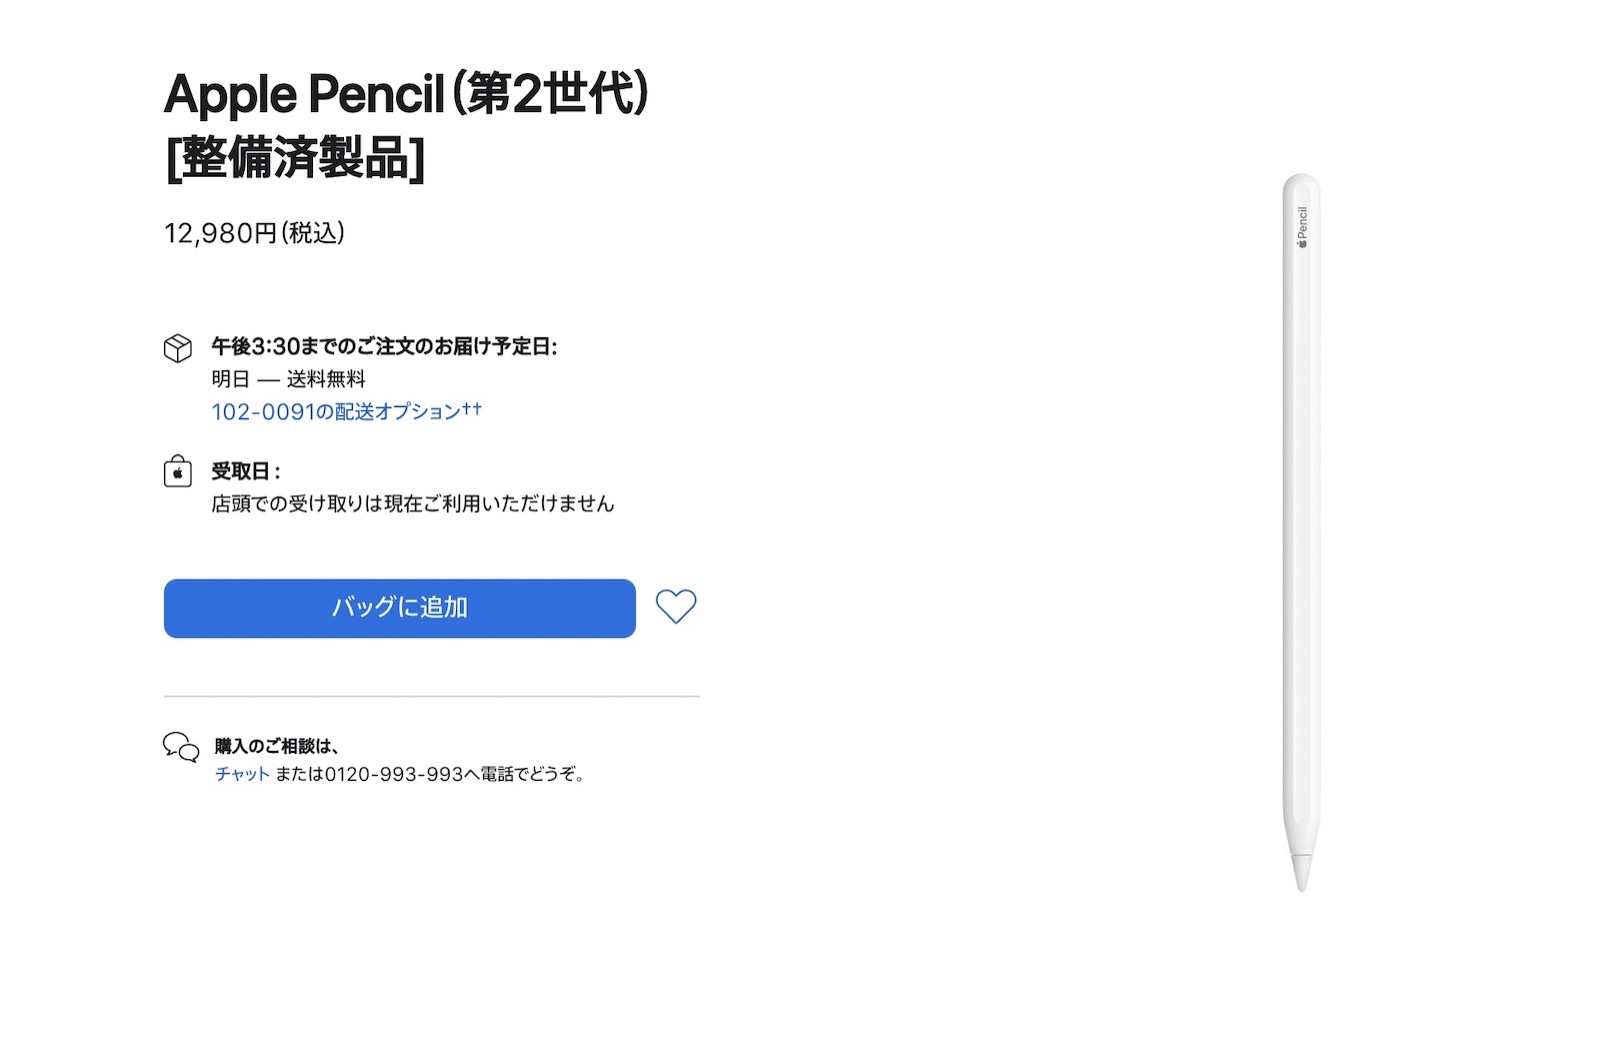 apple-pencil-refurbished-model.jpg